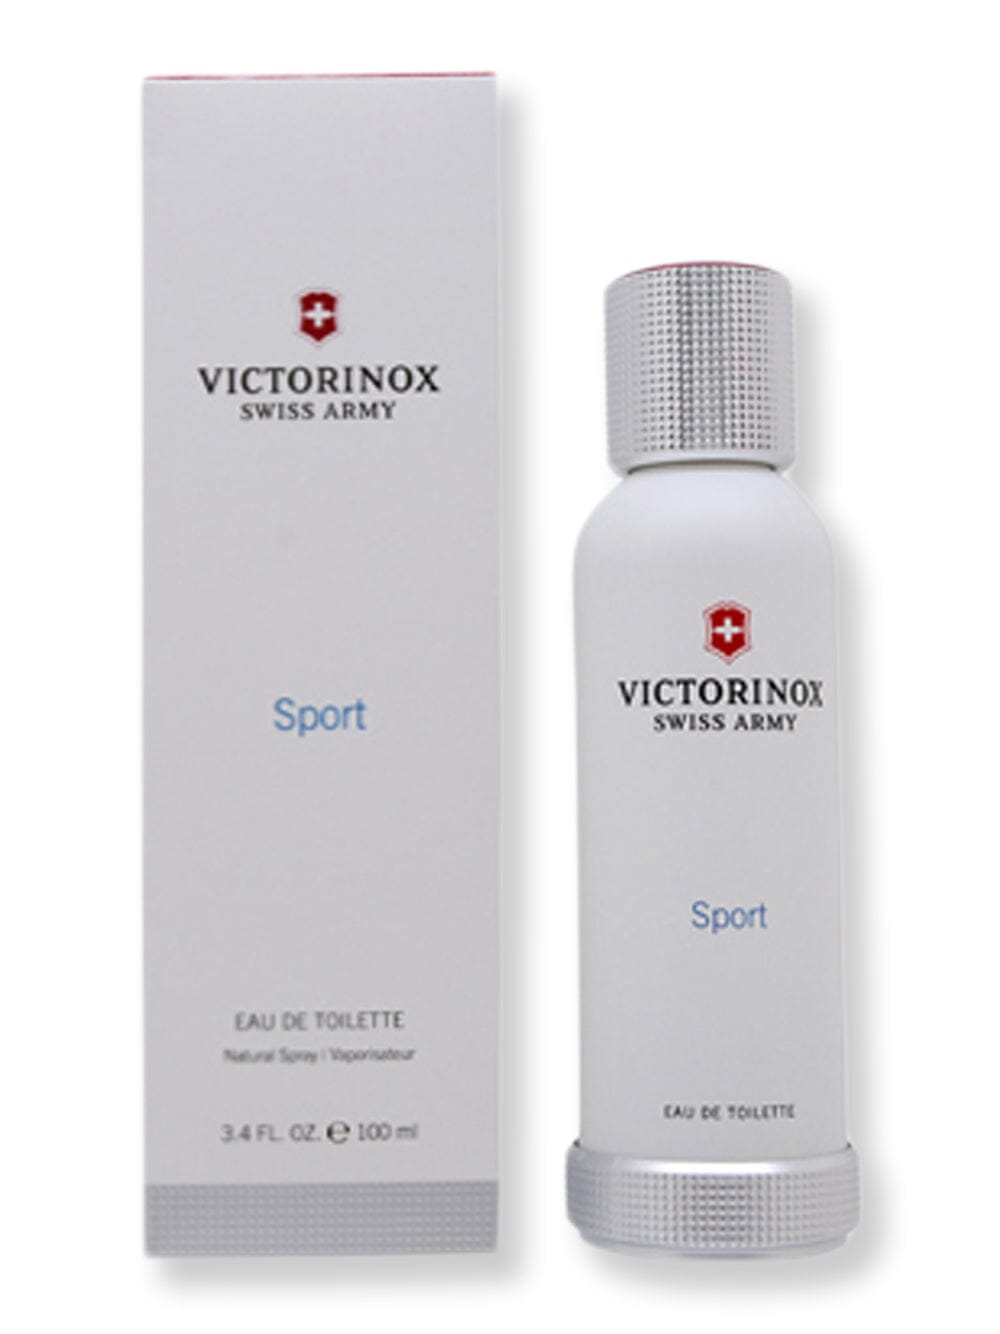 Victorinox Victorinox Swiss Army Sport EDT Sport Spray 3.4 oz100 ml Perfume 